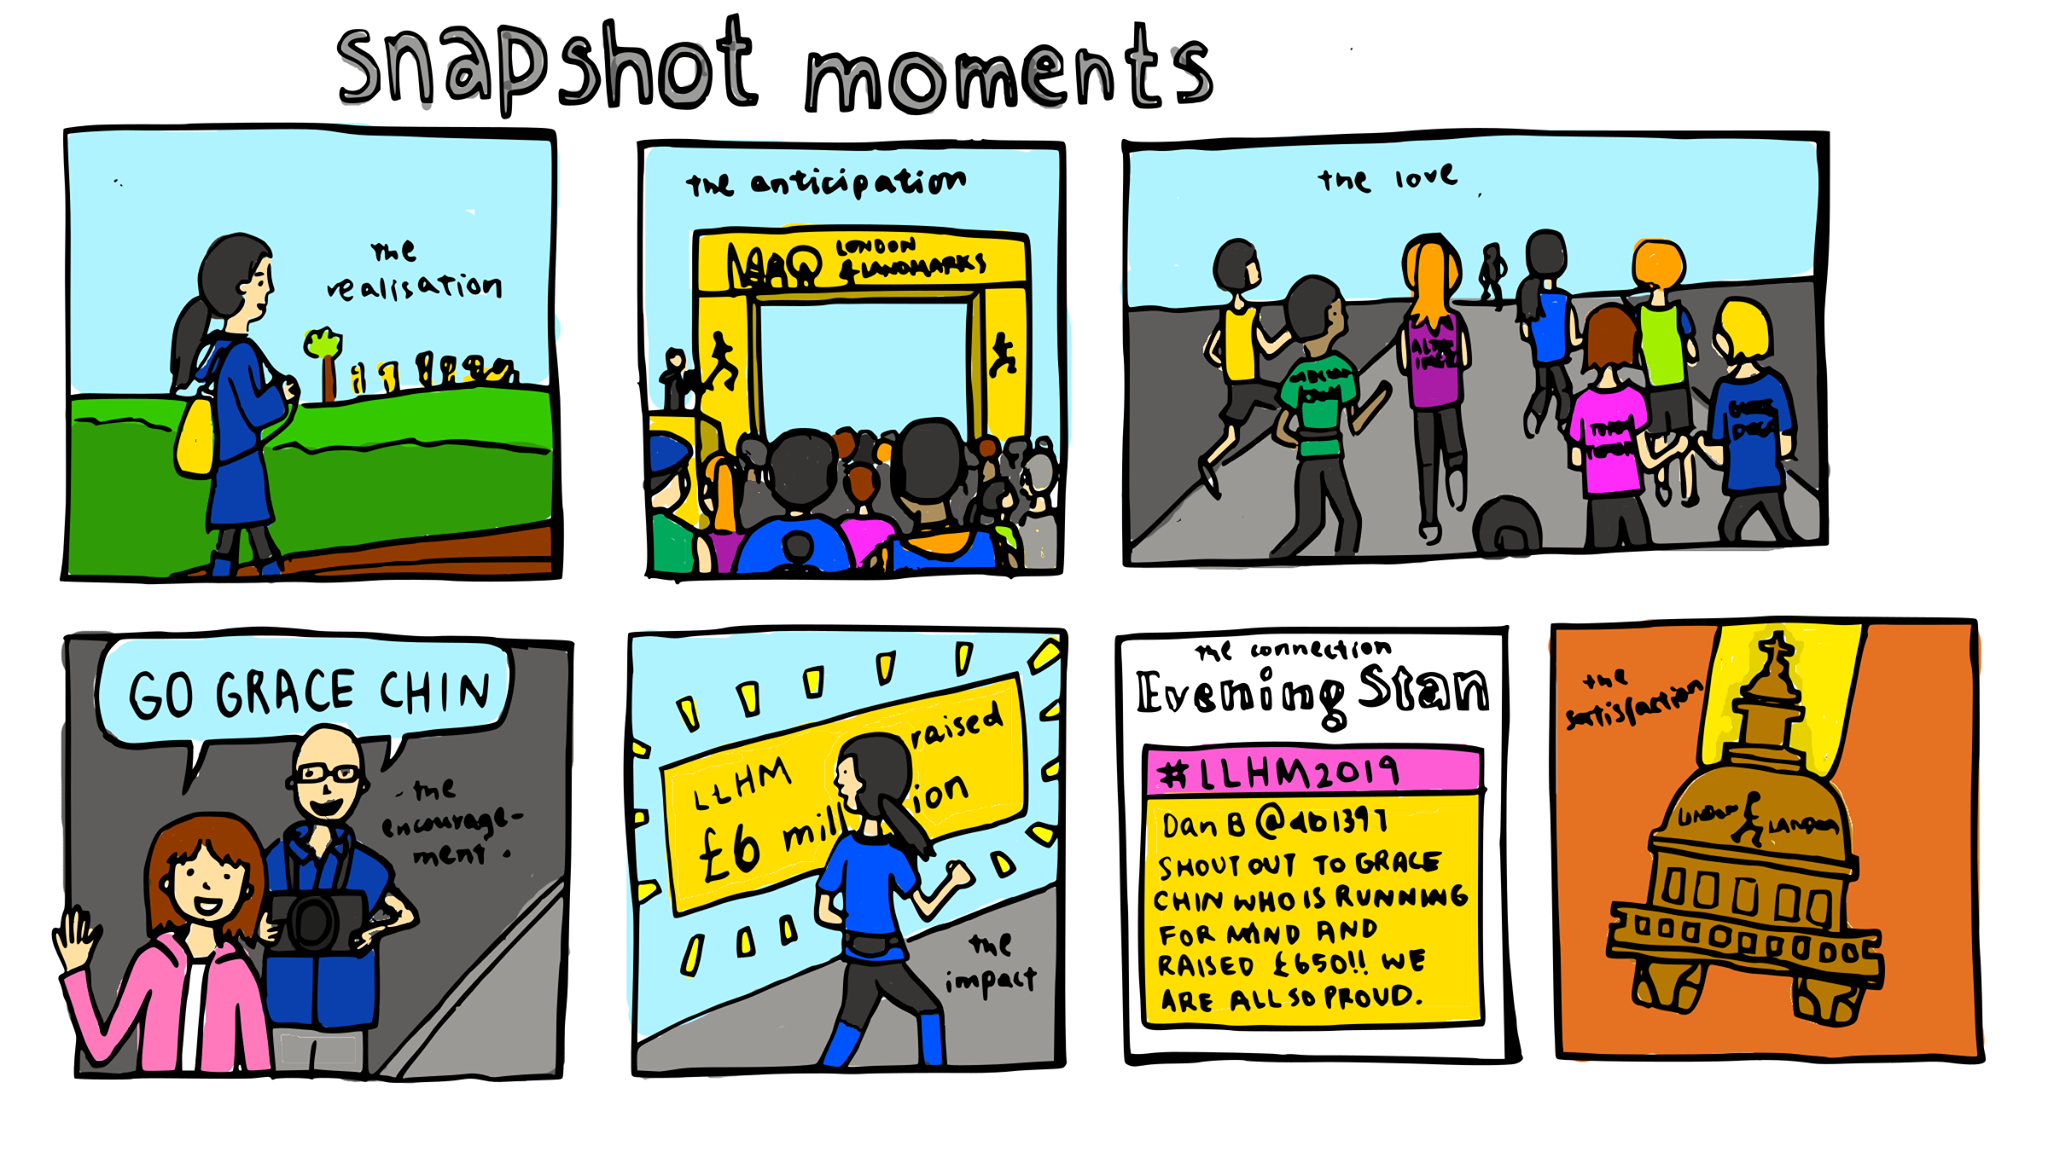 Half marathon running snapshot moments short comic